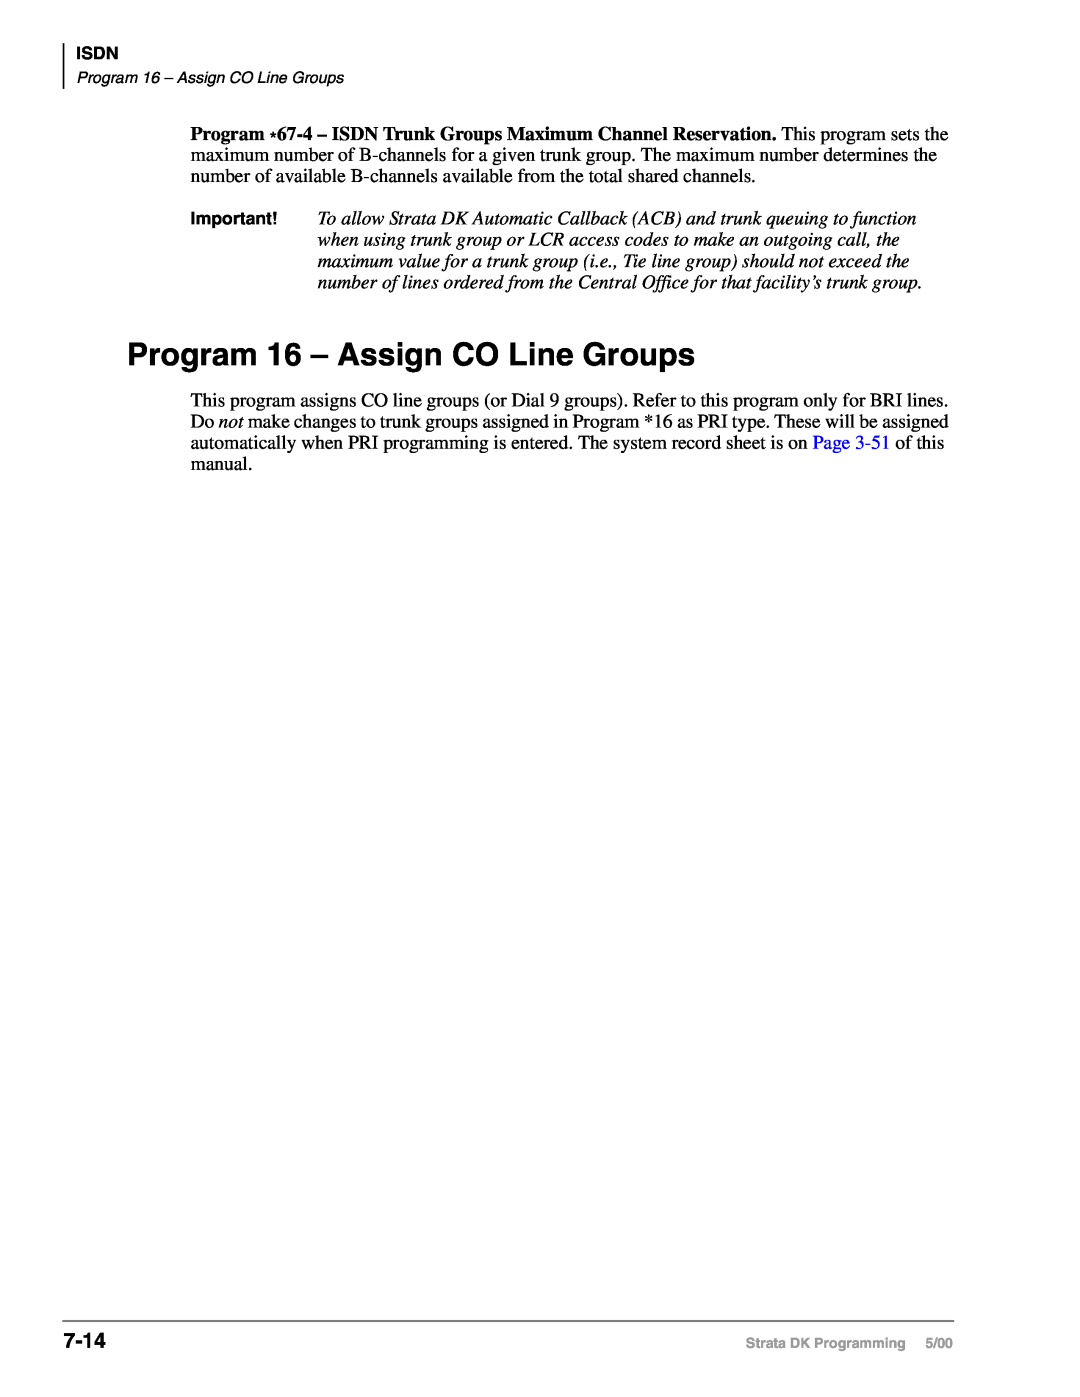 Toshiba DK40I, dk14, DK424I manual Program 16 - Assign CO Line Groups, 7-14, Program 16 – Assign CO Line Groups 